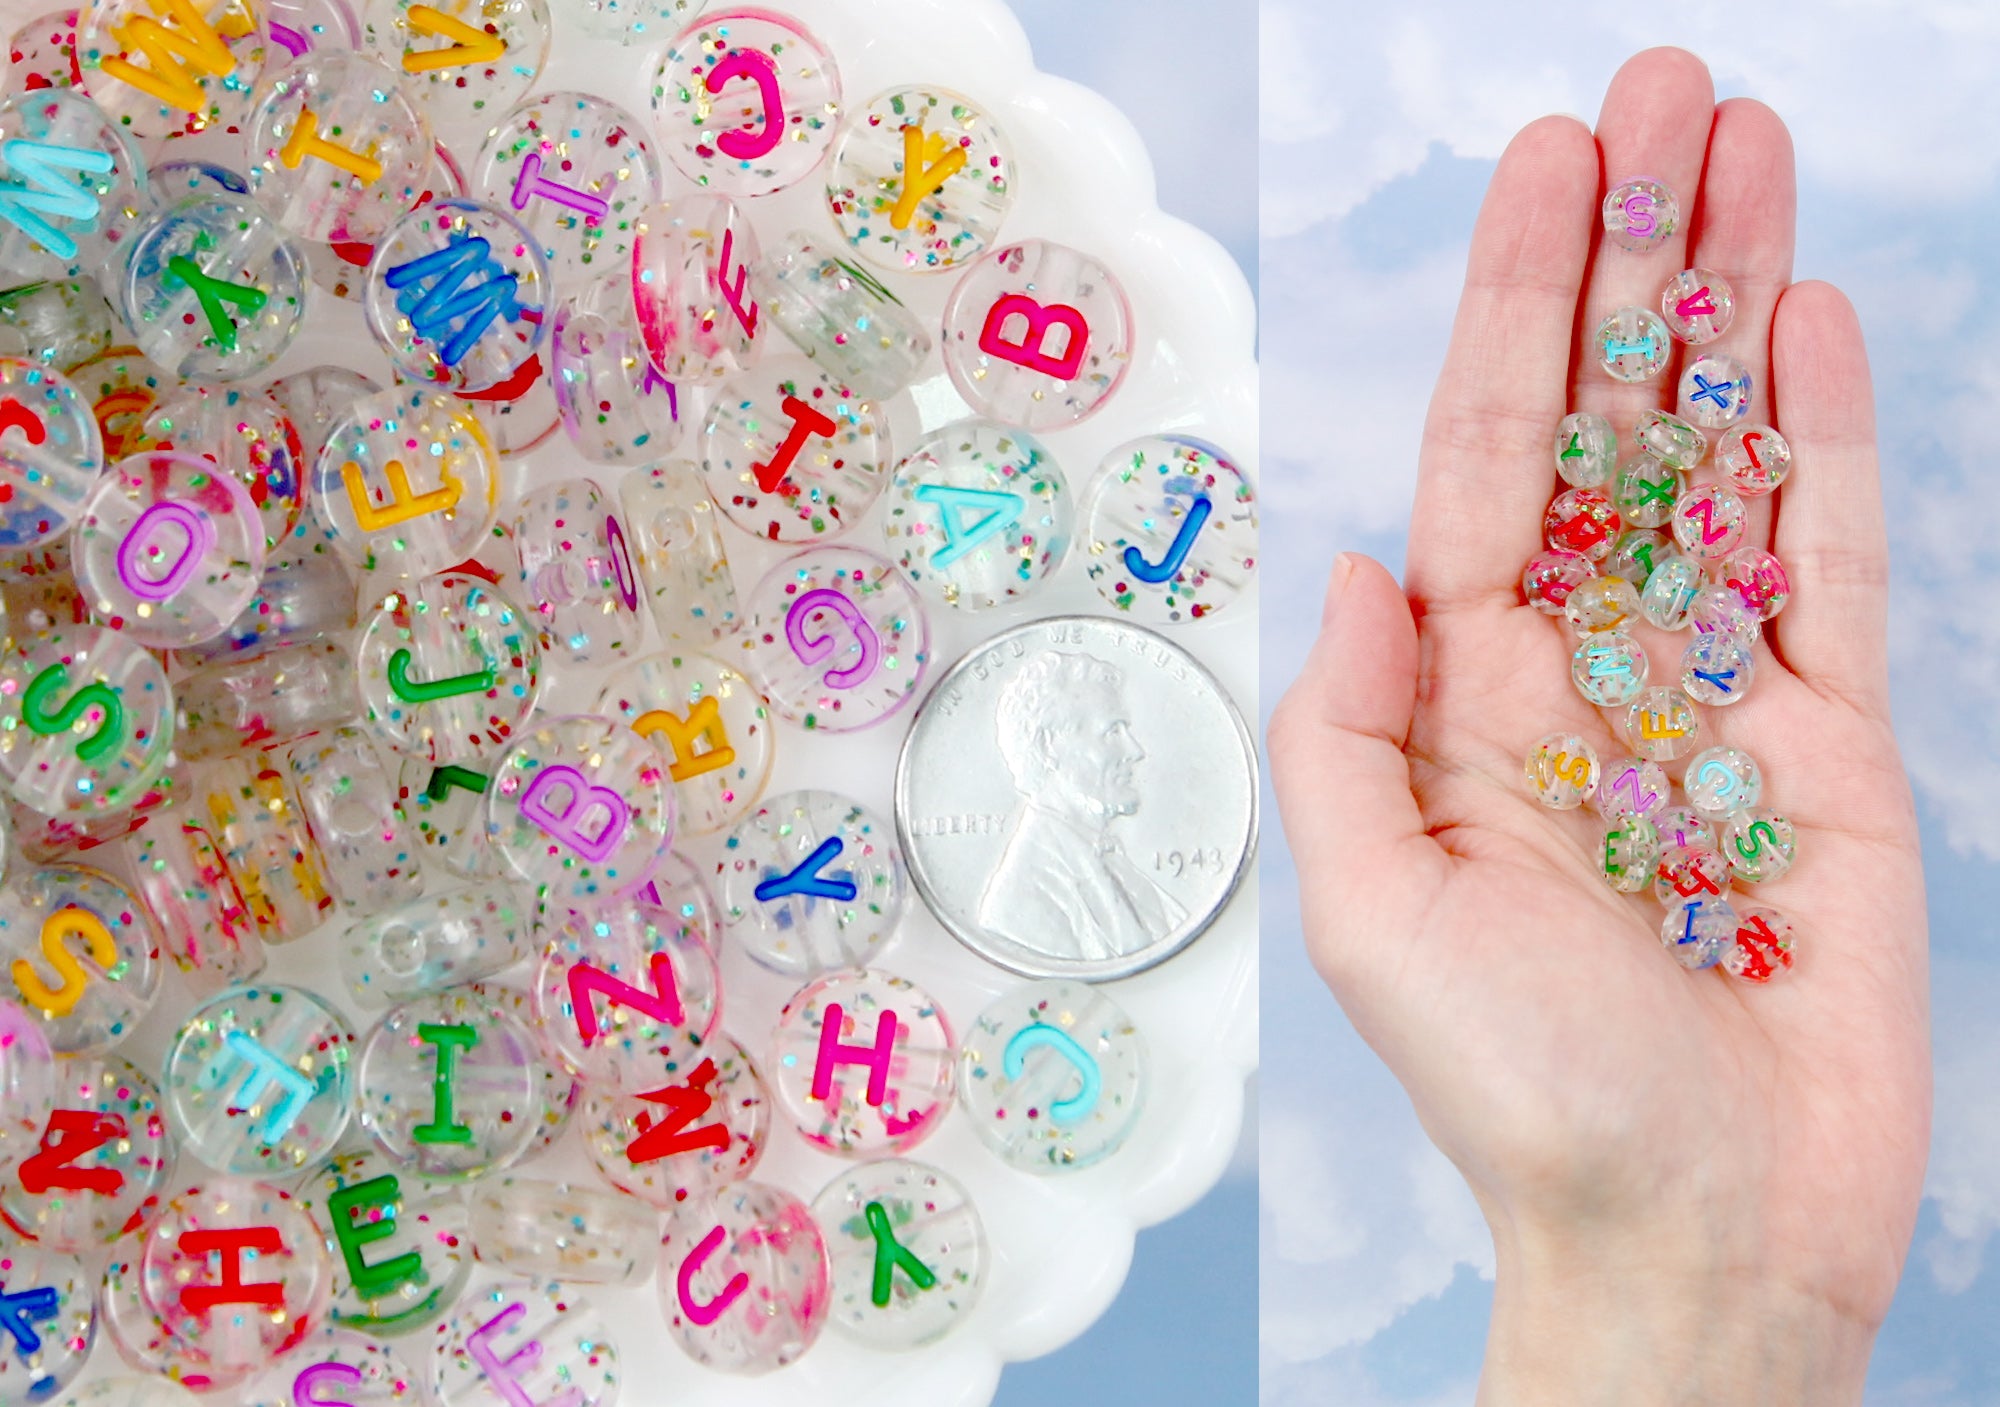 Creativity Street Plastic Alphabet Beads